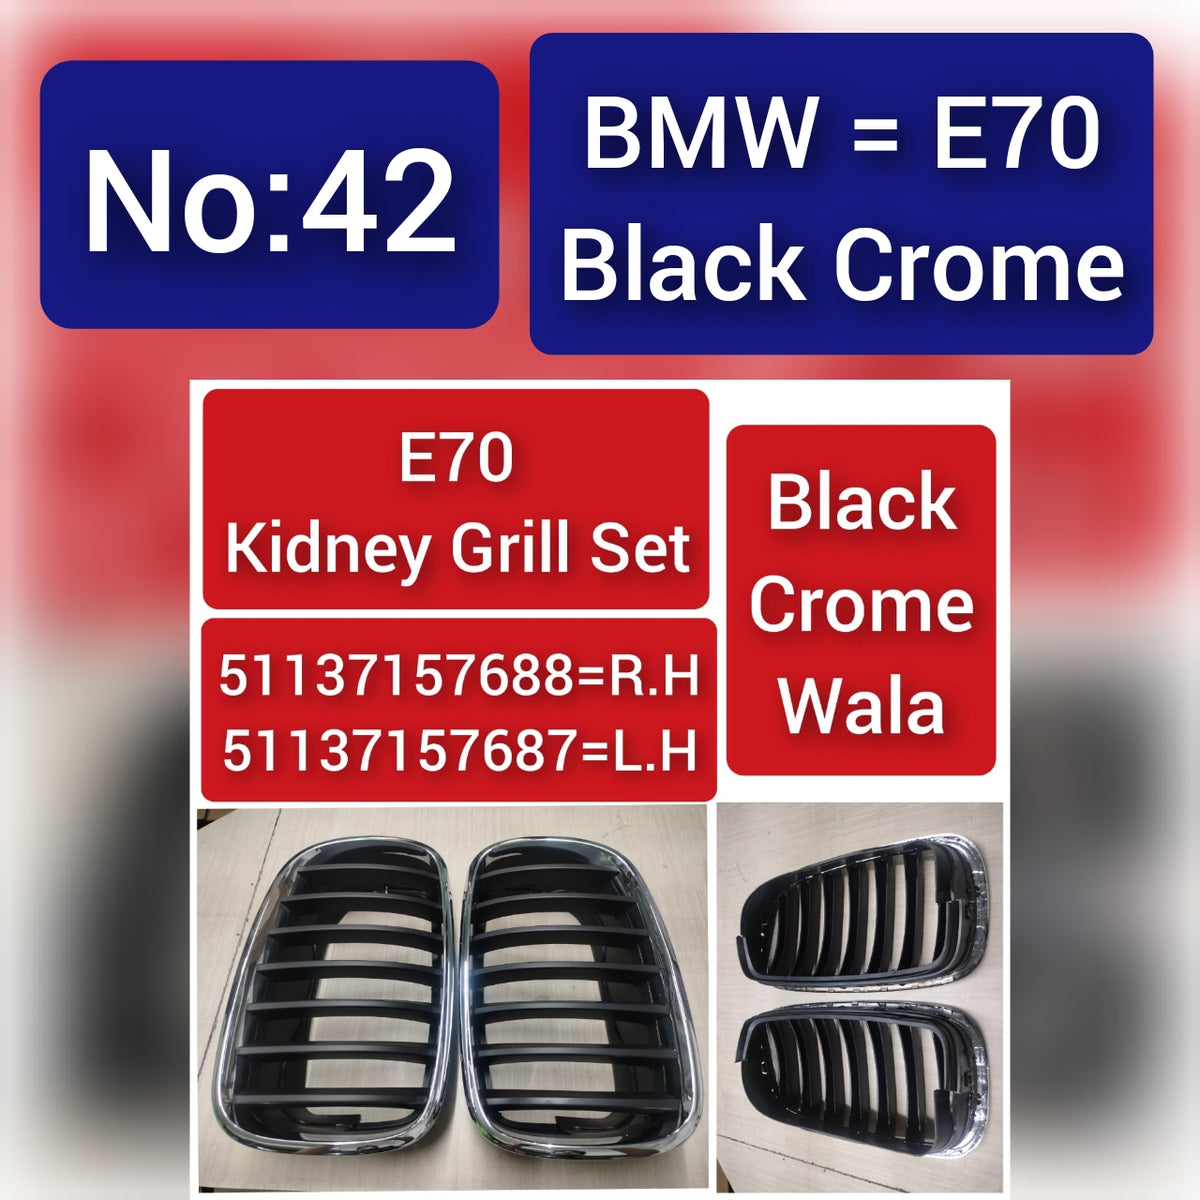 BMW = E70 Black Crome E70 Kidney Grill Set 51137157688=R.H, 51137157687=L.H Black Crome Wala Tag 42